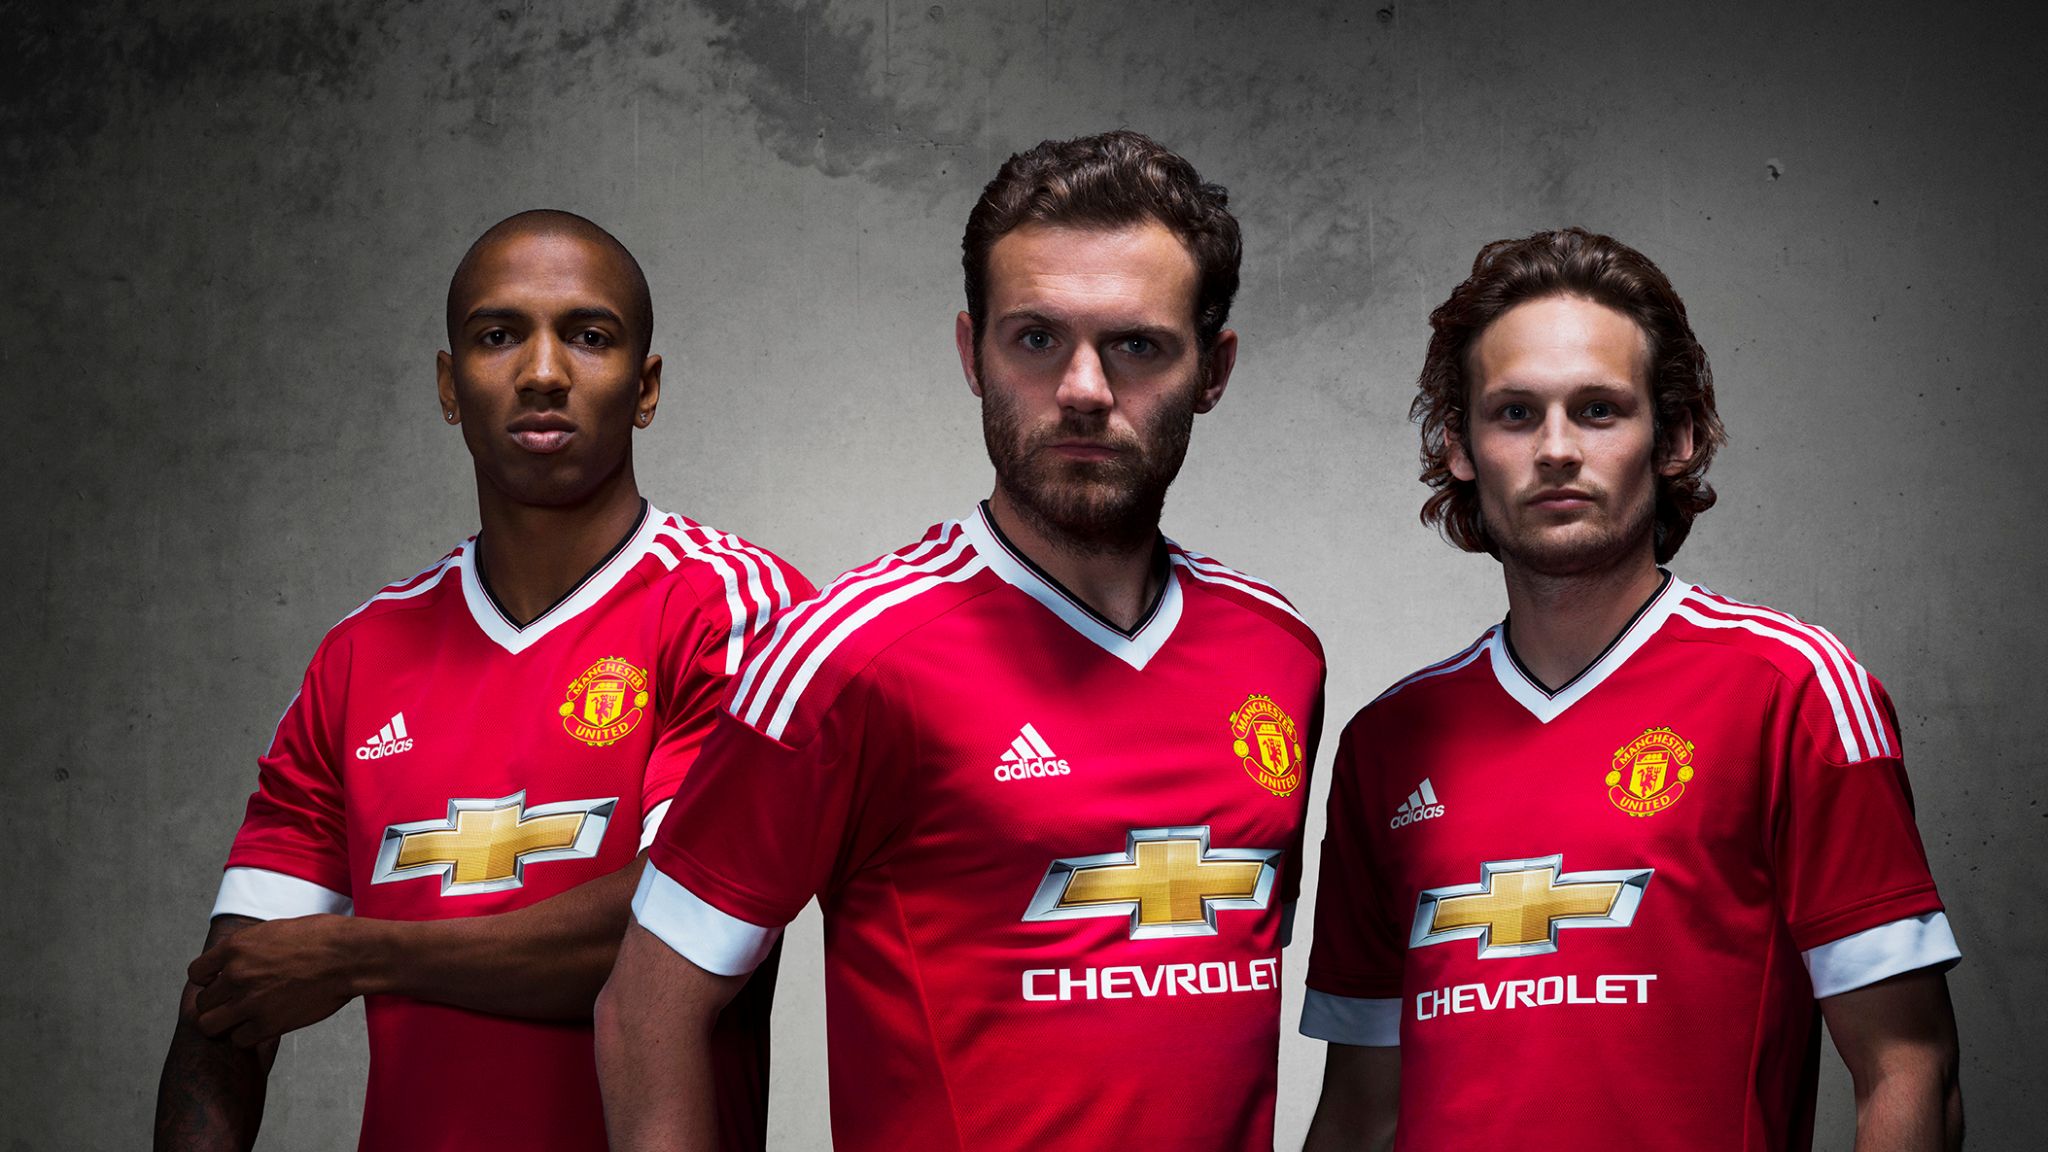 Manchester United new adidas kit for 2015/16 season | Football News Sky Sports